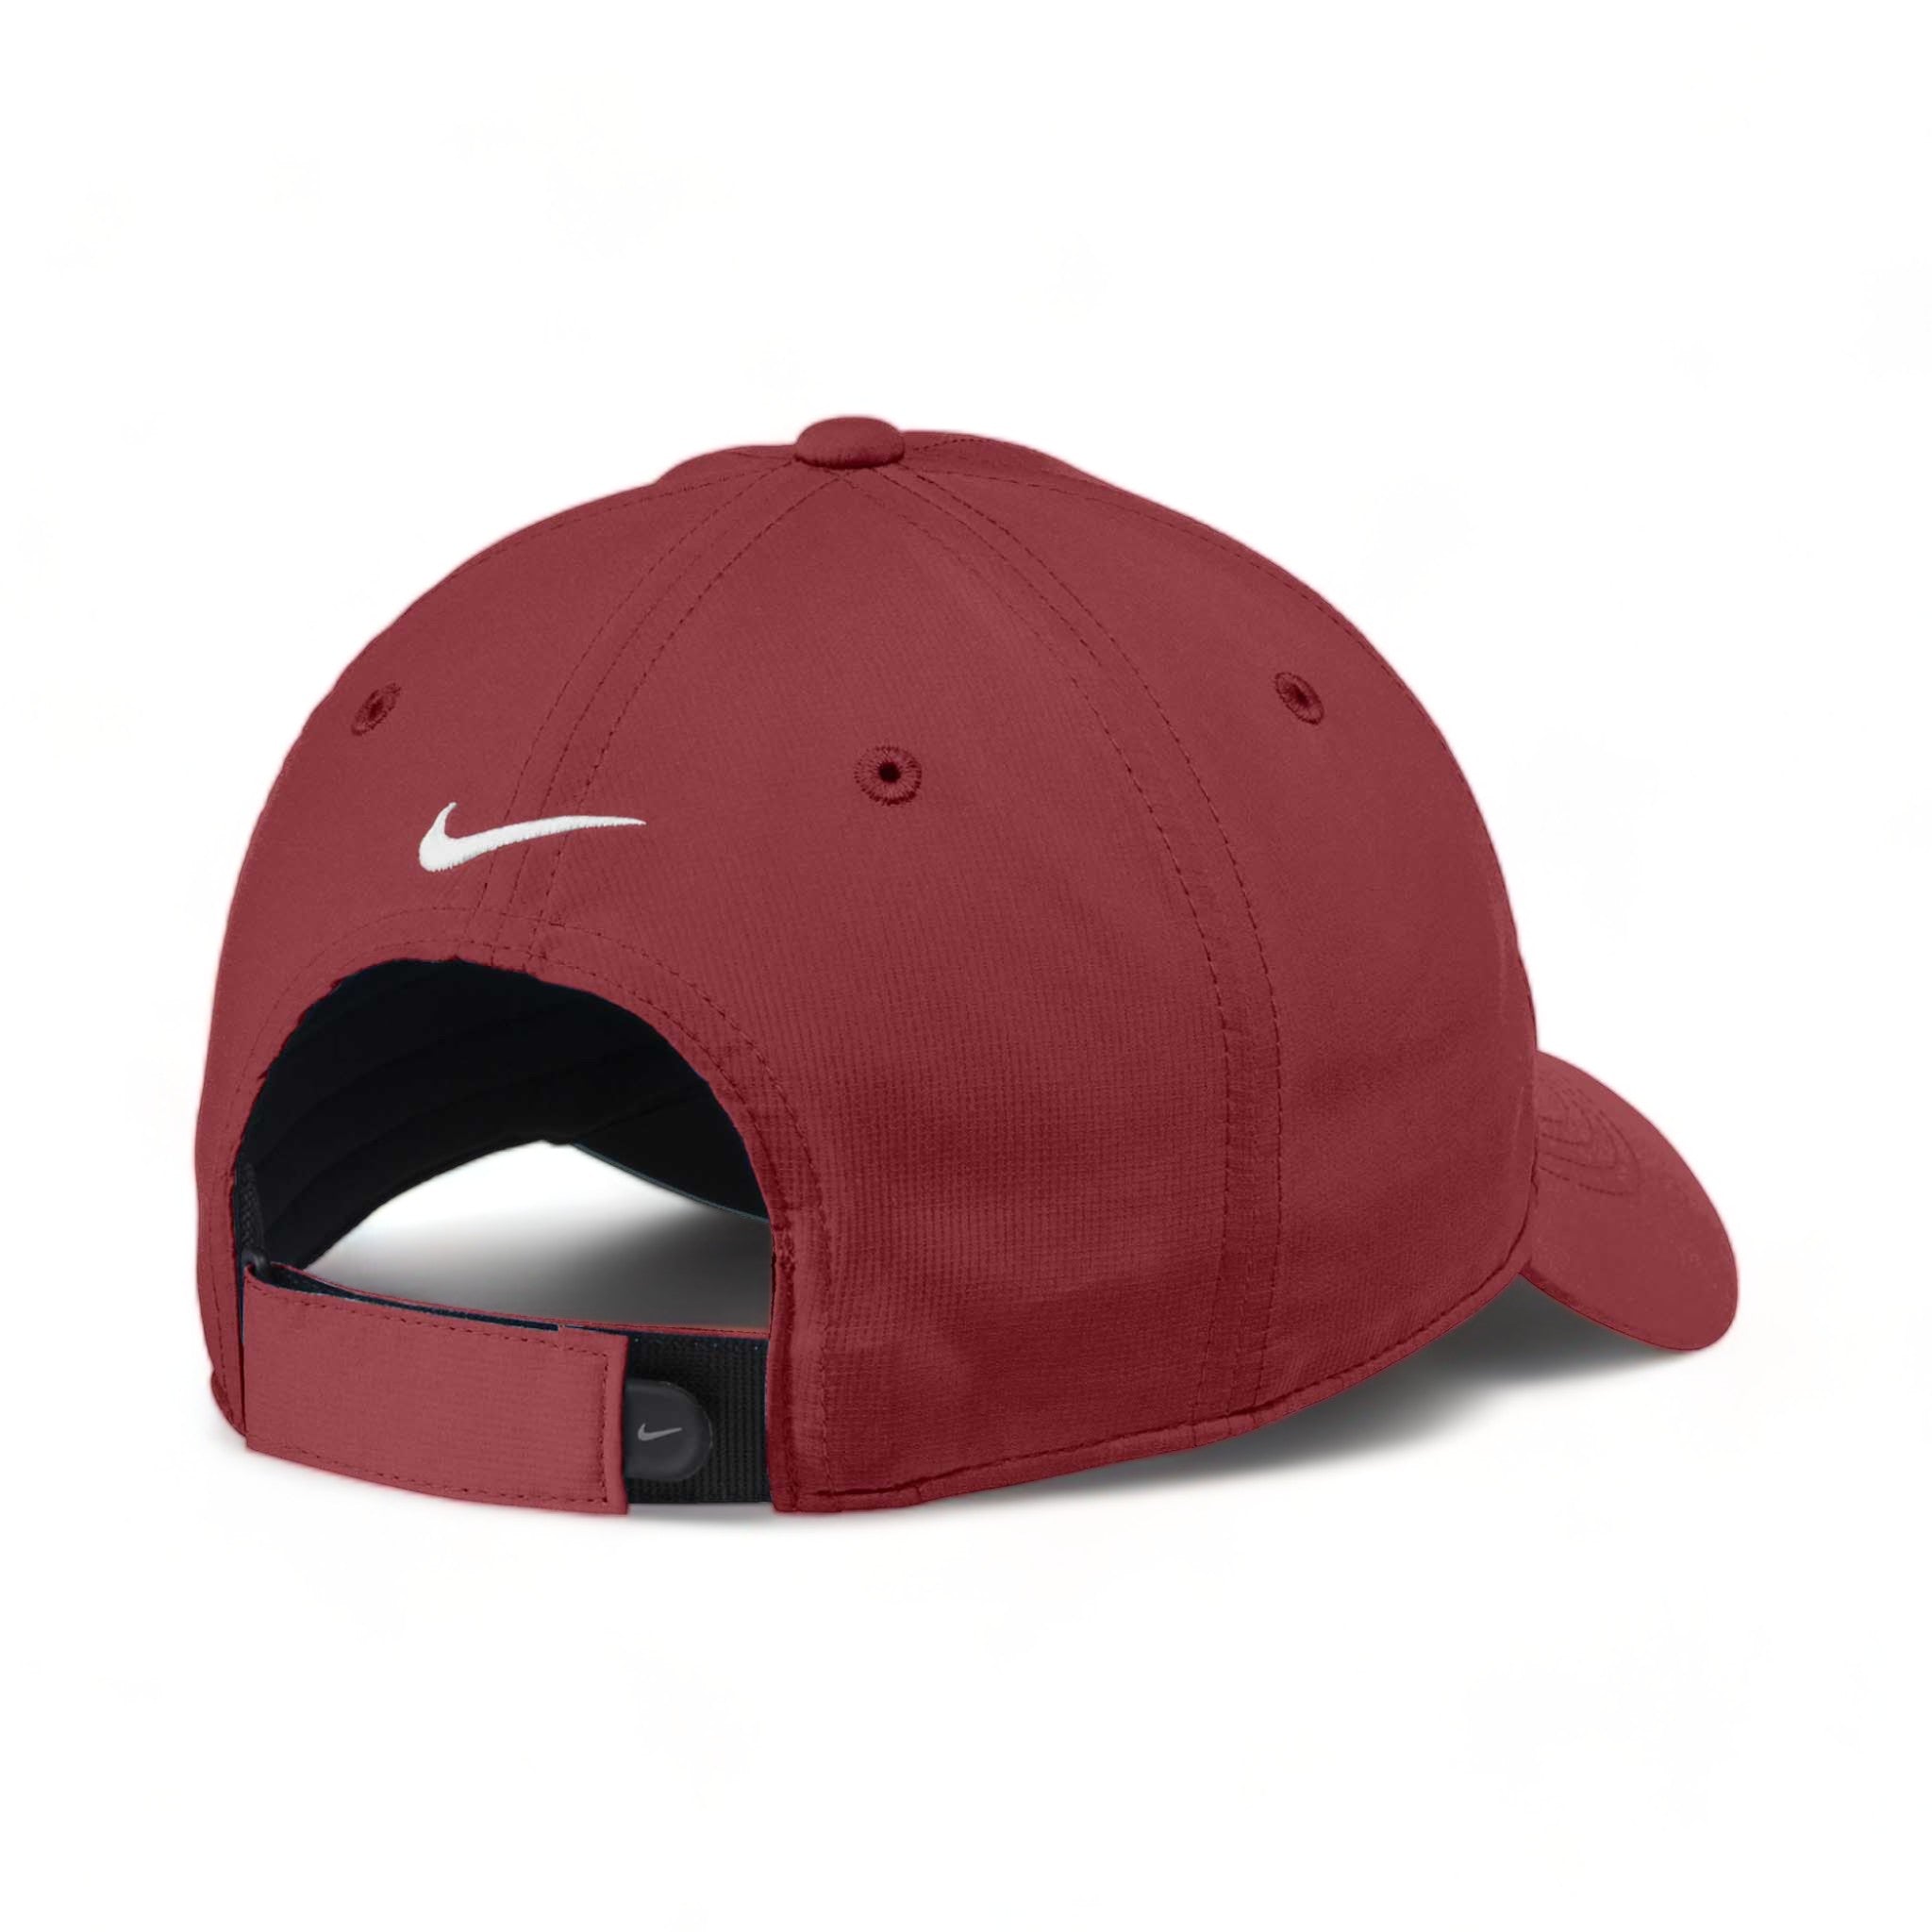 Back view of Nike NKFB6444 custom hat in team red